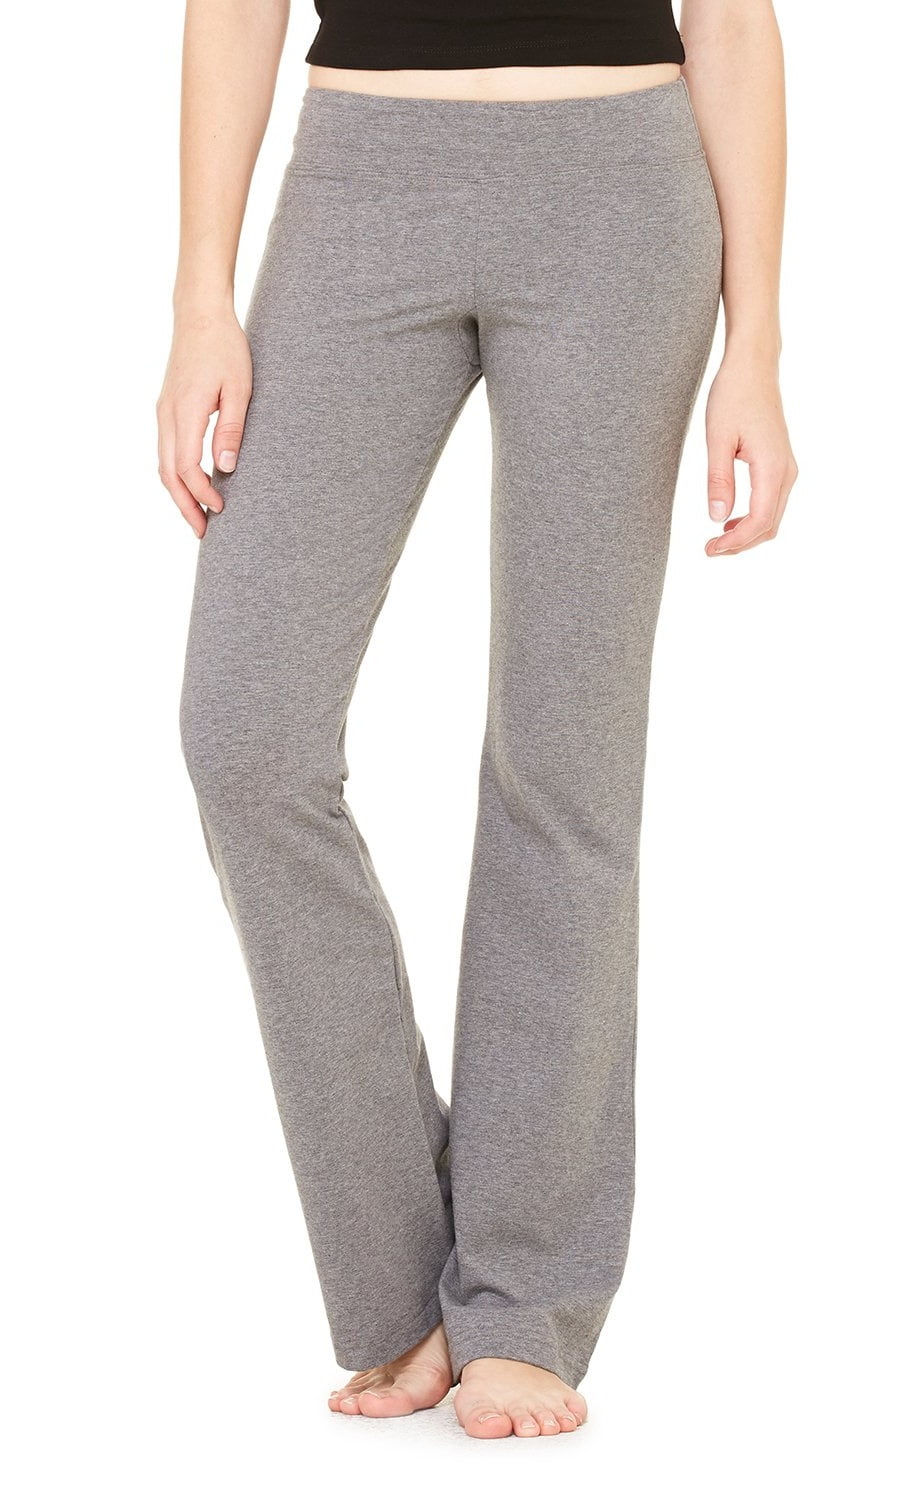 Women's Cotton/Spandex Fitness Pant - Walmart.com